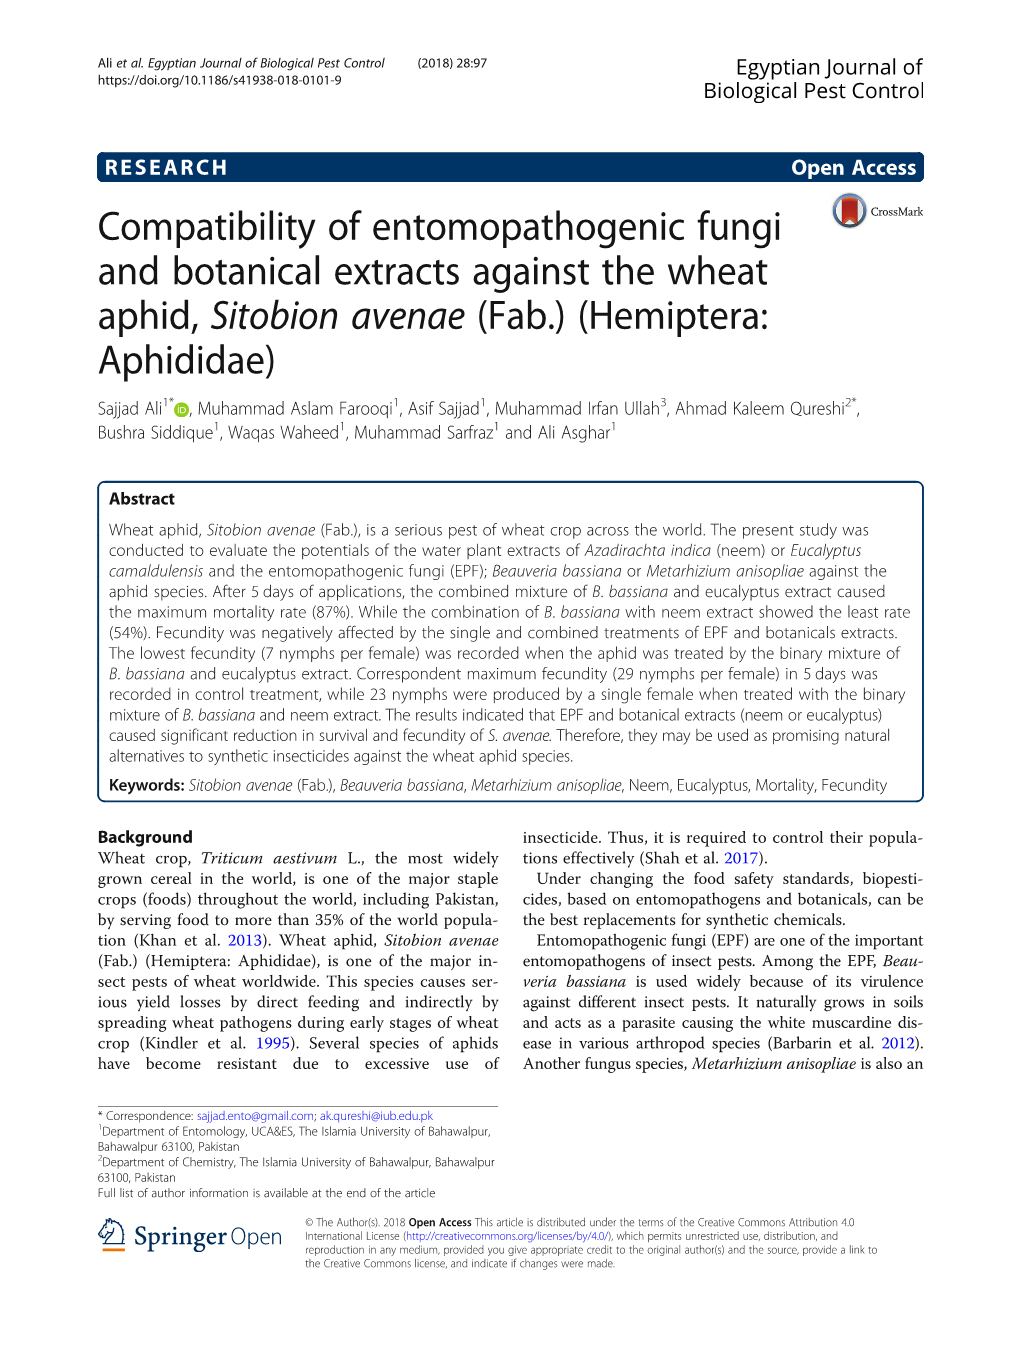 Compatibility of Entomopathogenic Fungi and Botanical Extracts Against the Wheat Aphid, Sitobion Avenae (Fab.) (Hemiptera: Aphid